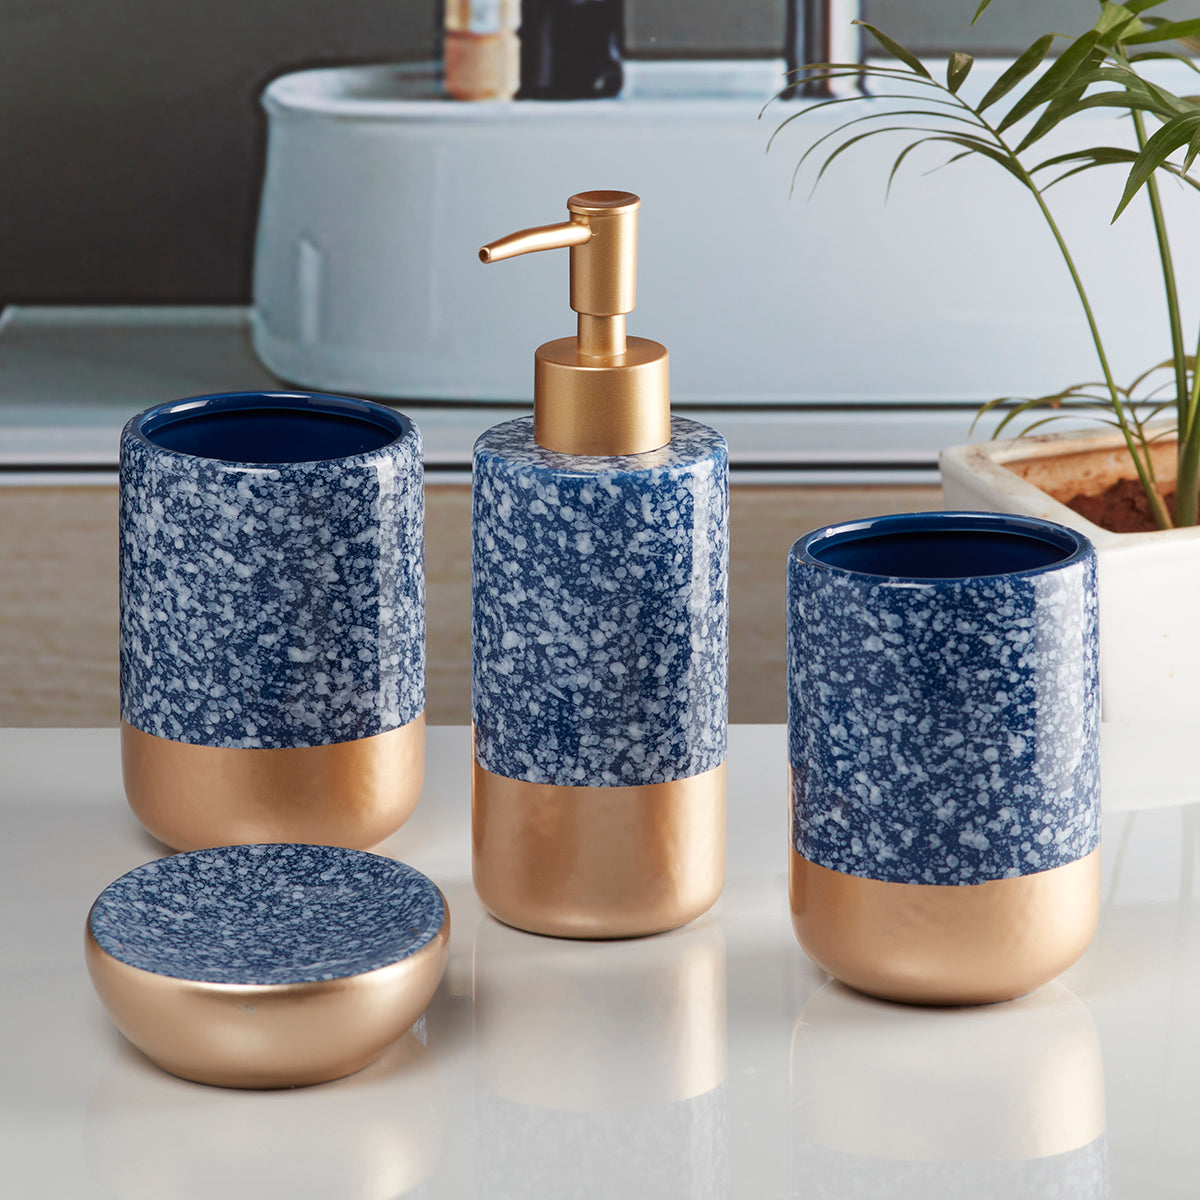 Ceramic Bathroom Accessories Set of 4 Bath Set with Soap Dispenser (10088)